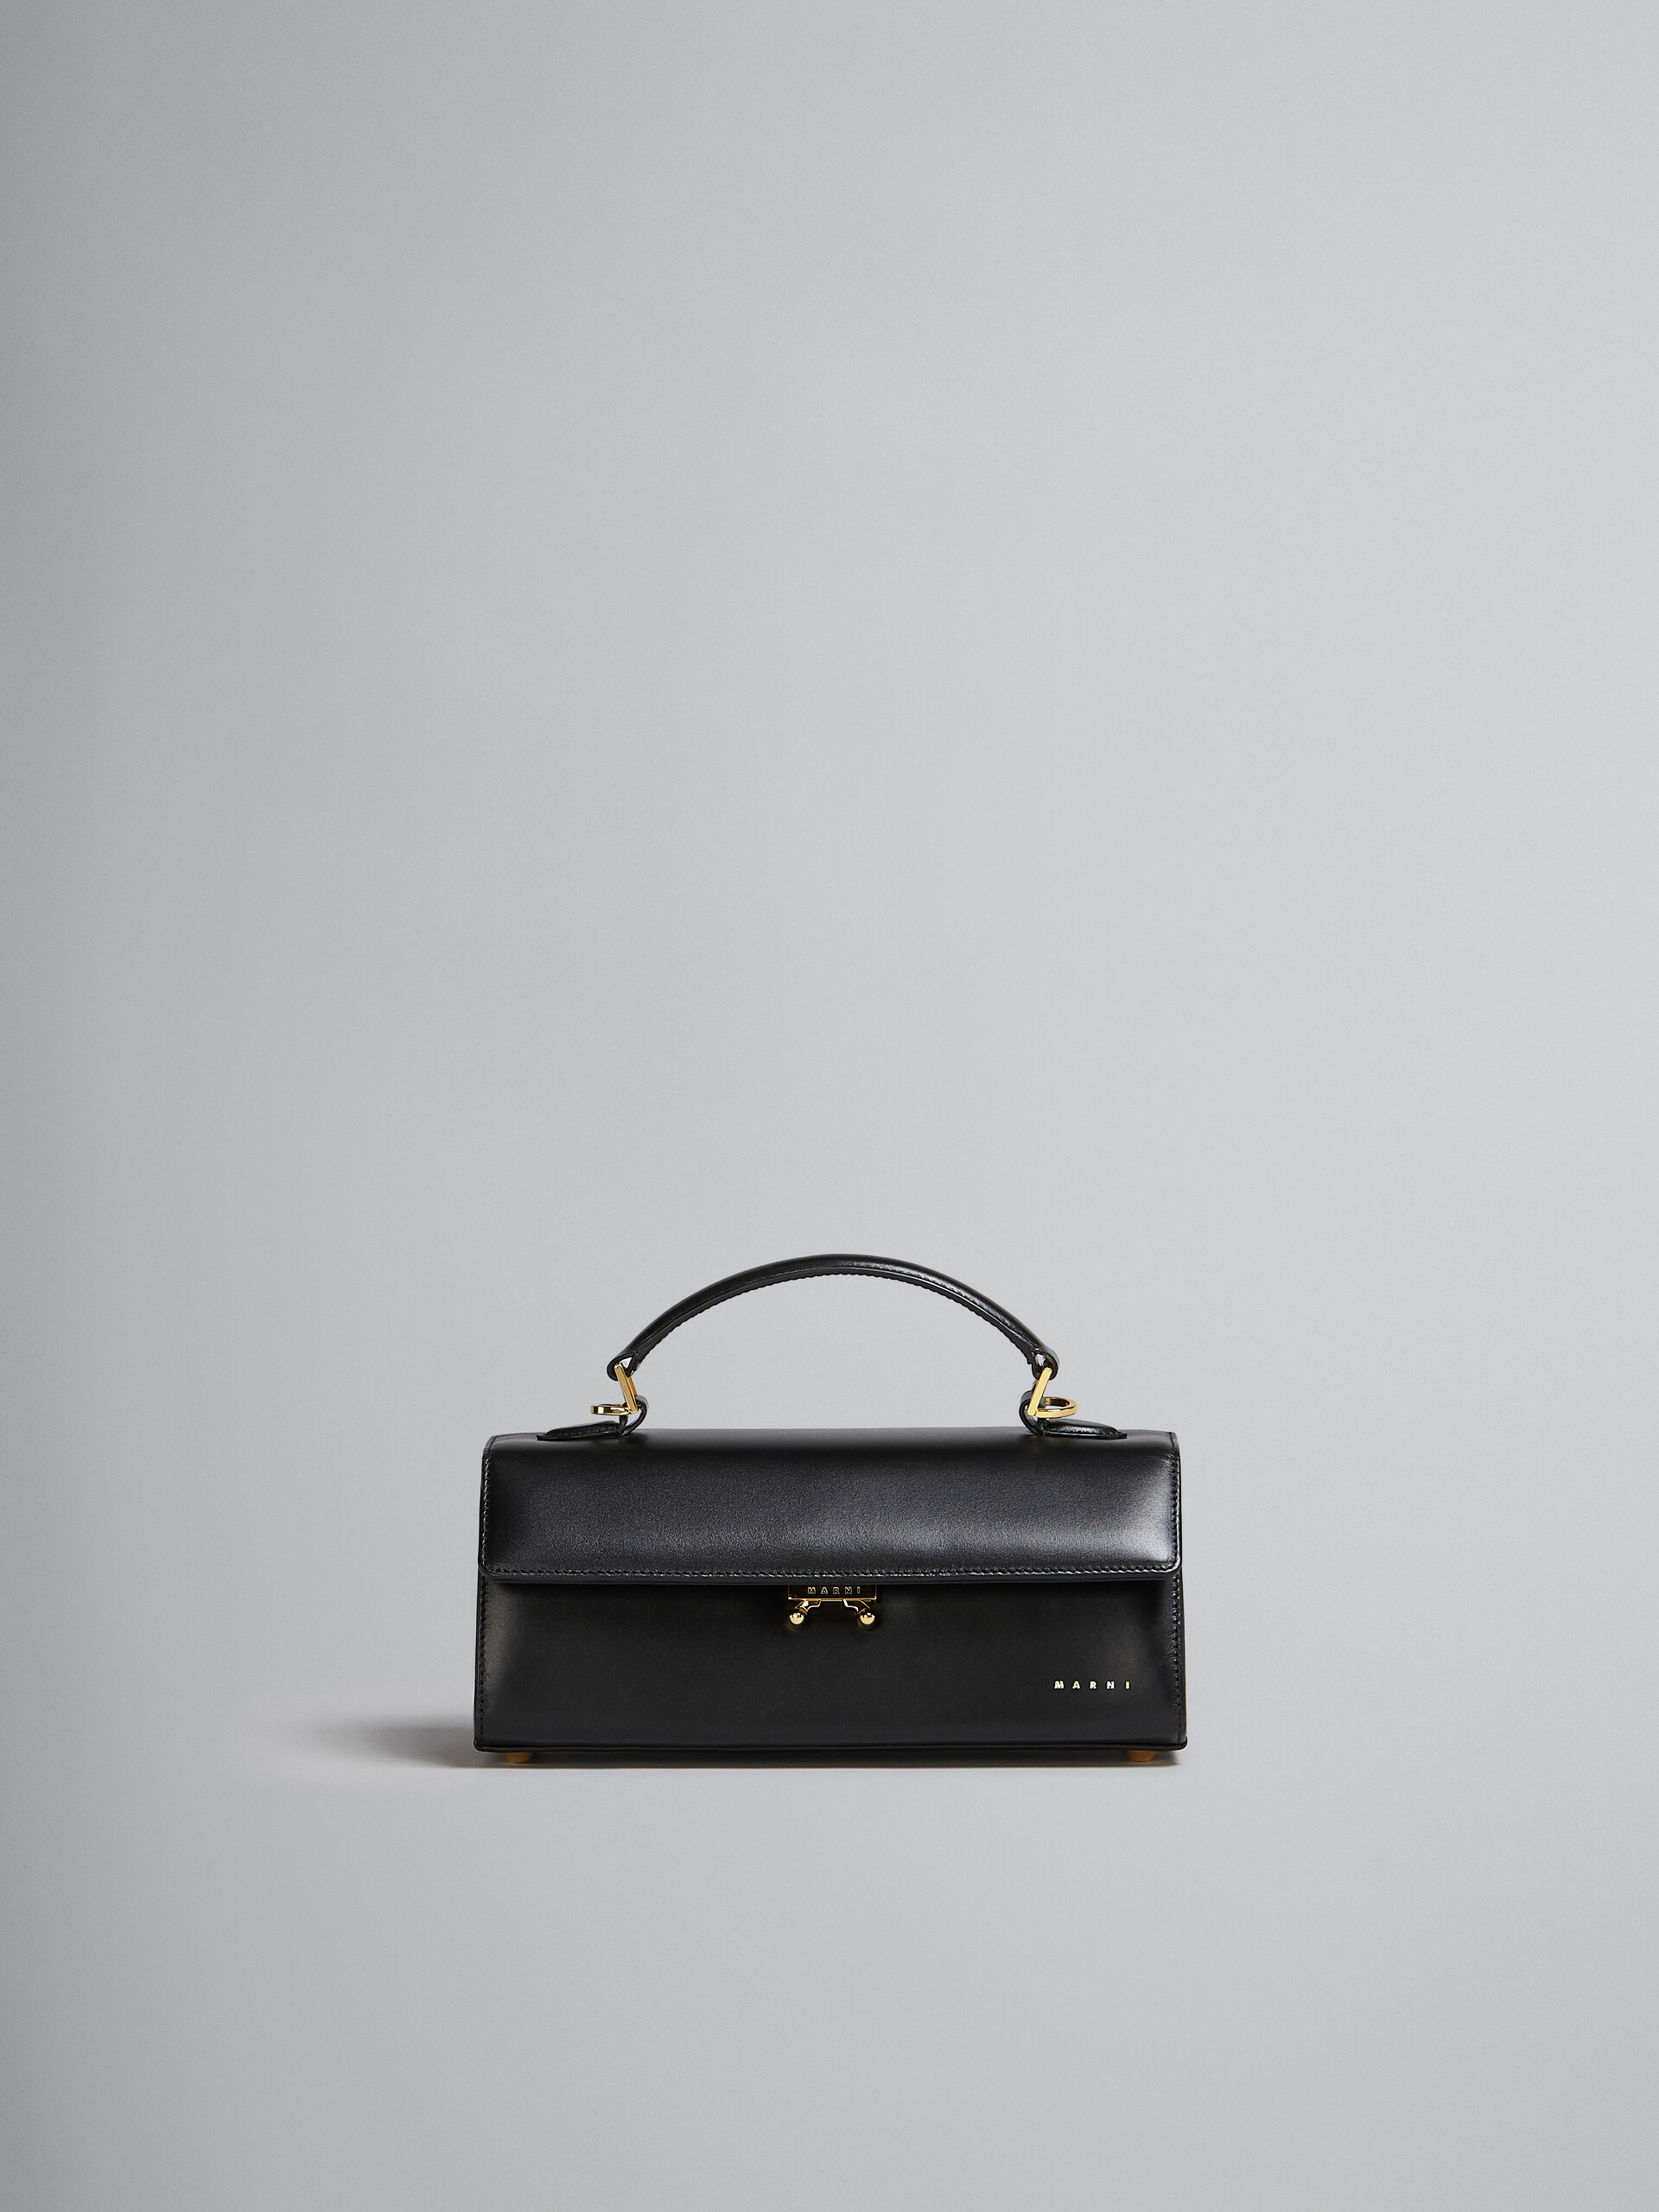 Relativity Medium Bag in black leather - Handbag - Image 1